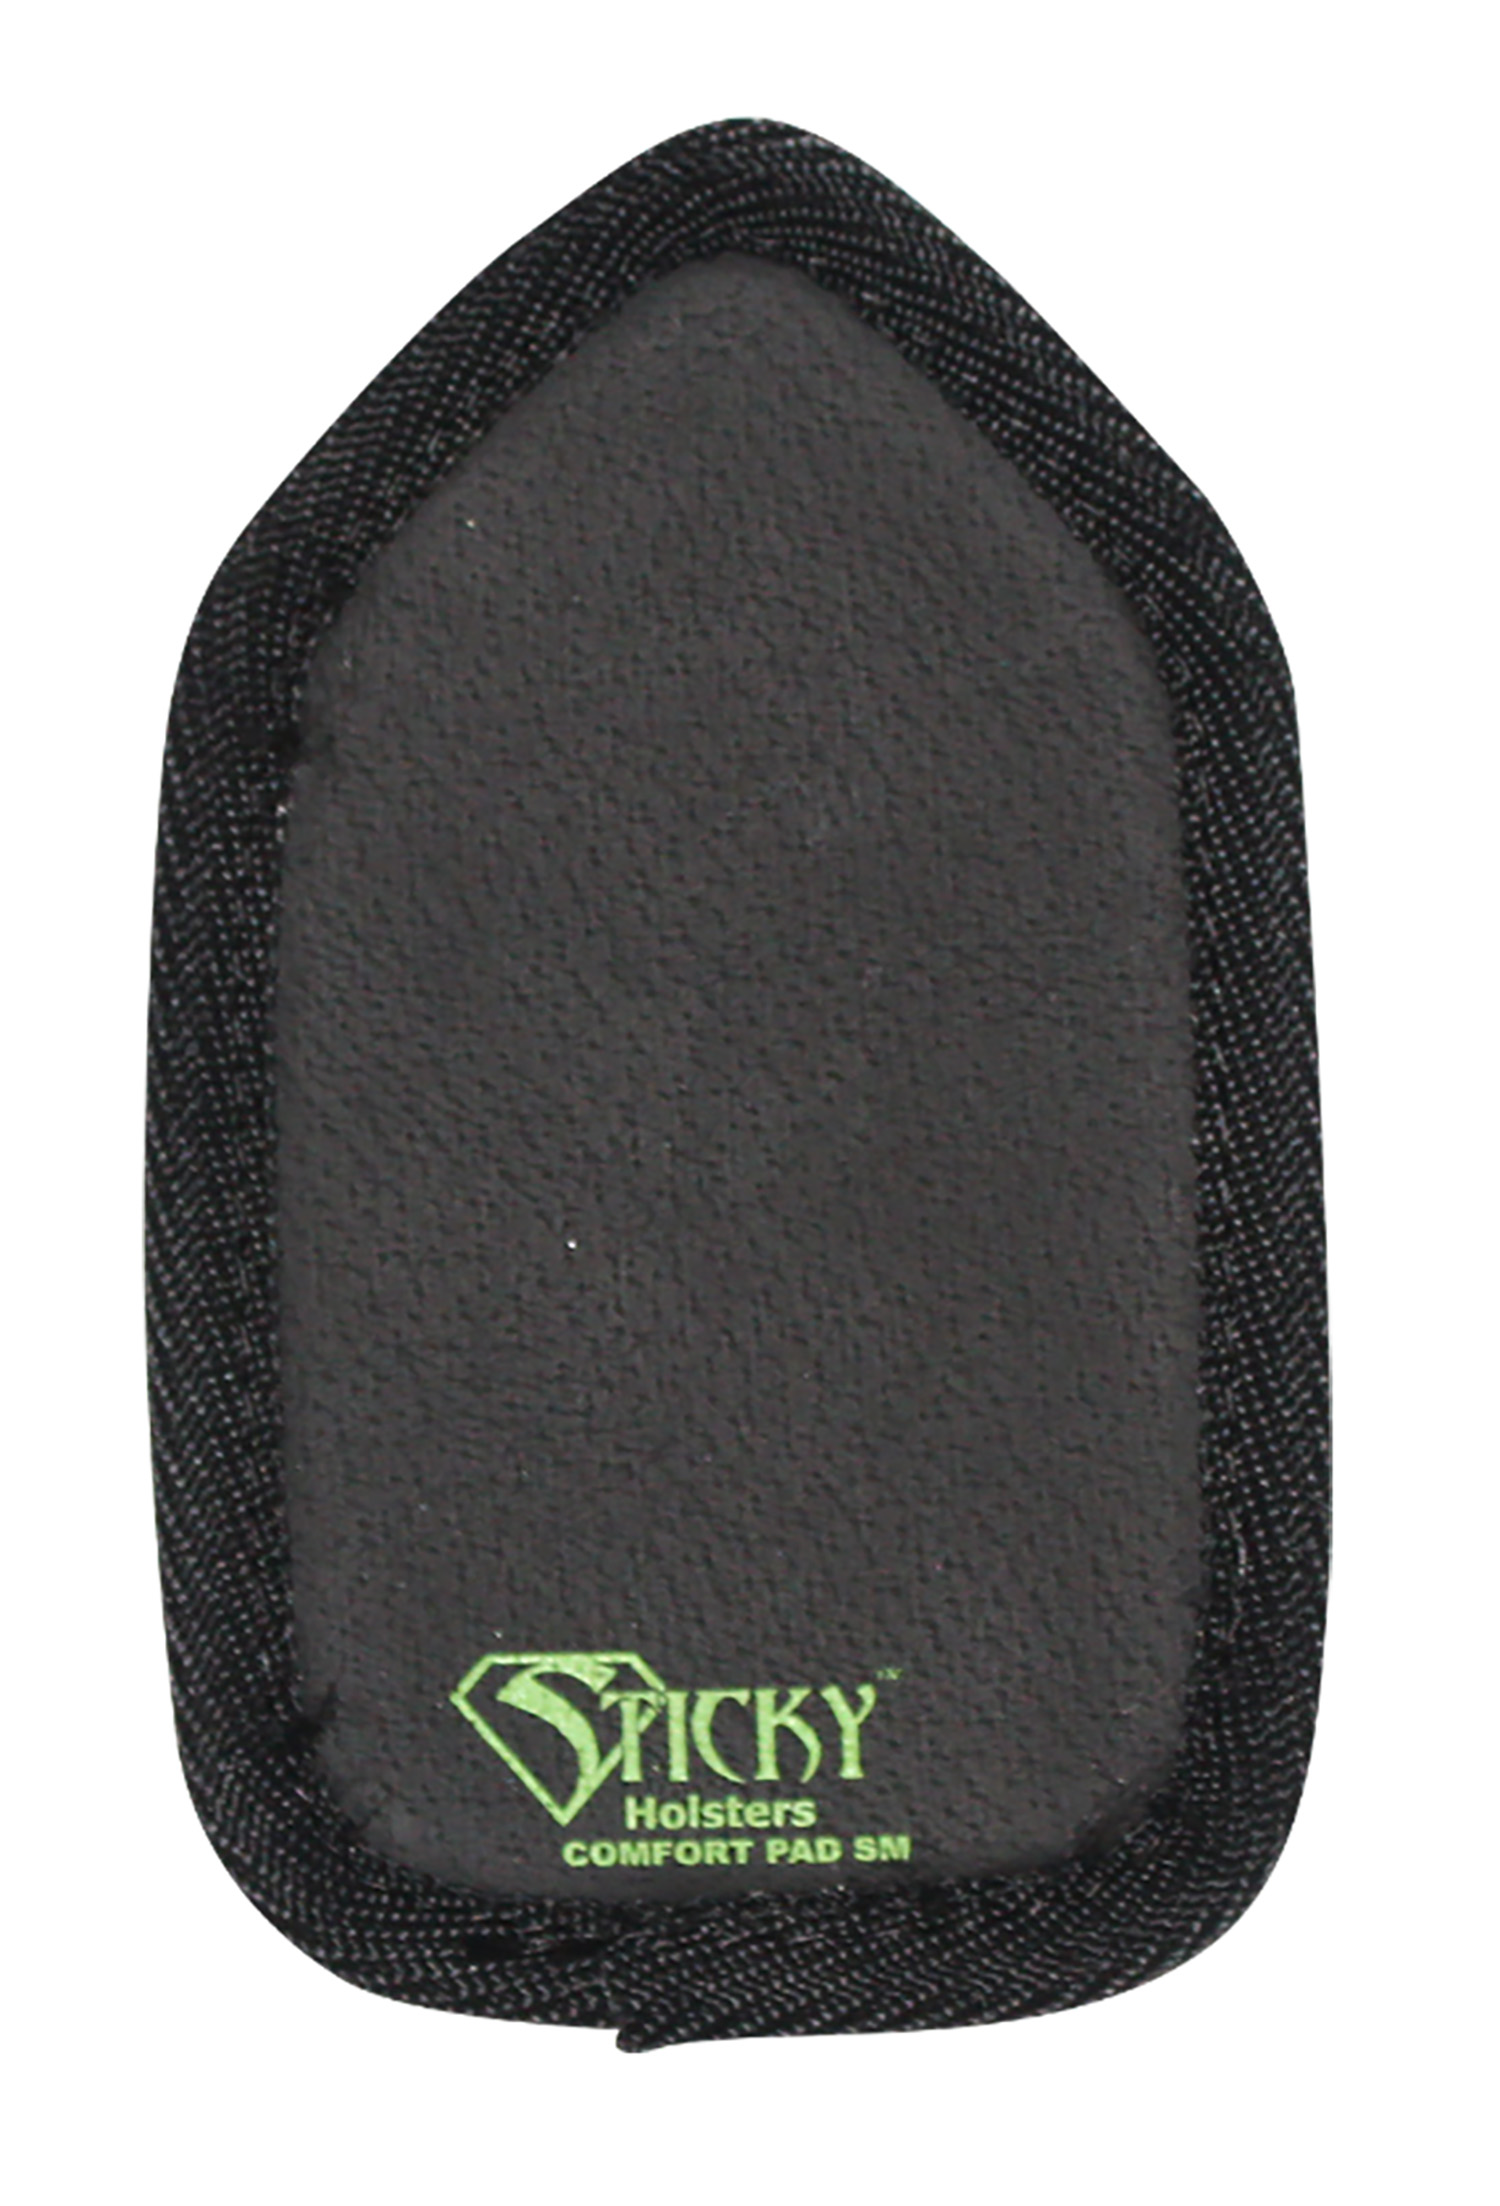 Sticky Holsters COMFORTPADSM Comfort Pad Holster Cushion Small Black Foam IWB Ambidextrous Hand